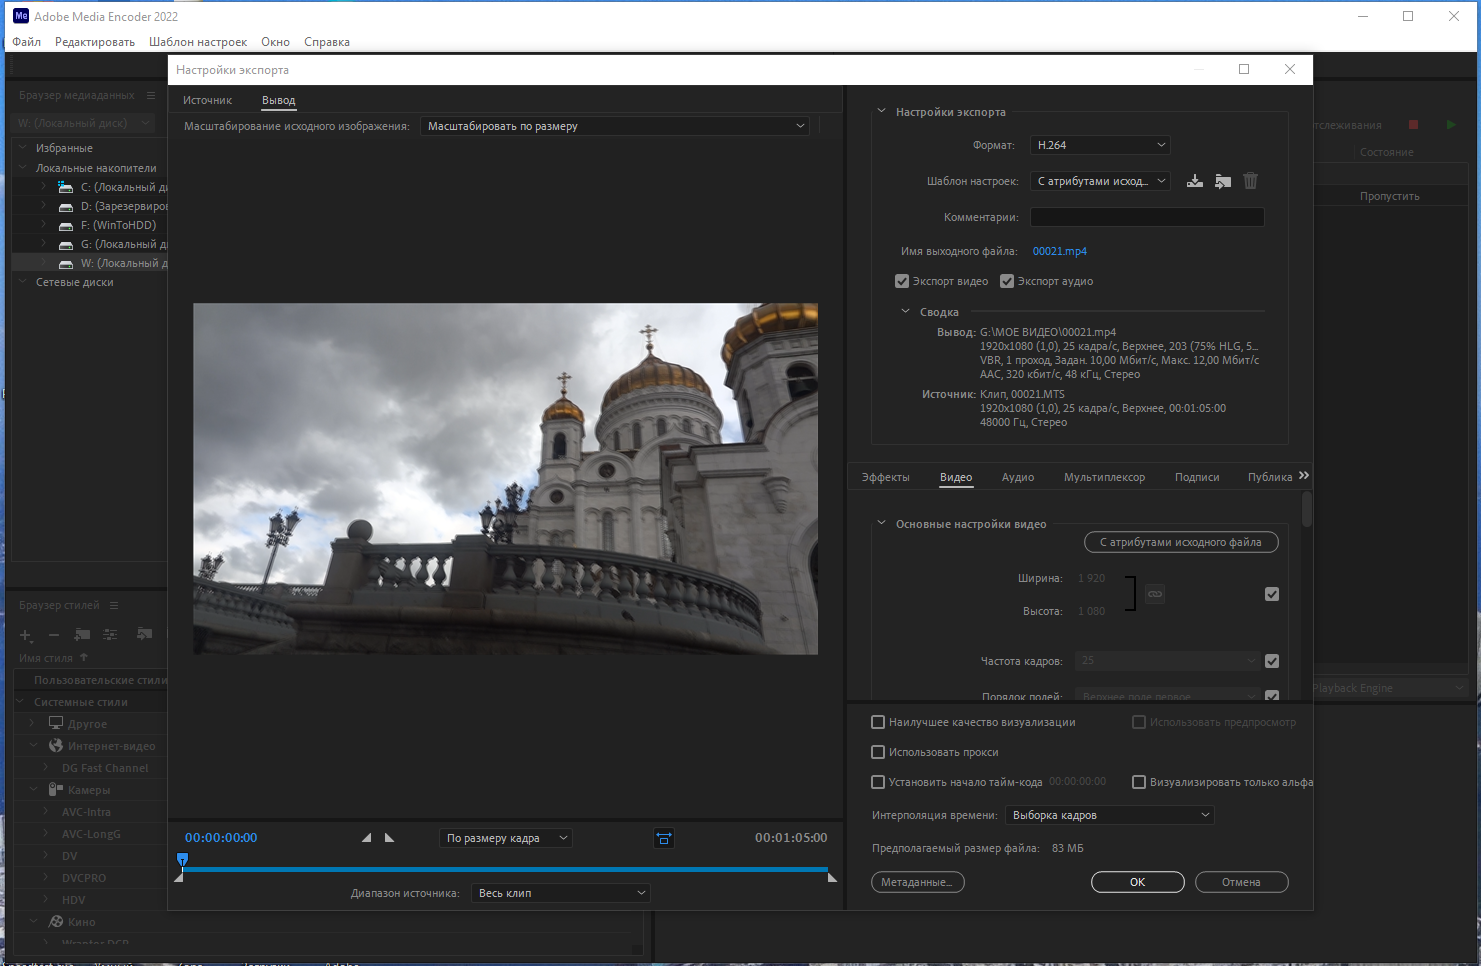 Adobe Media Encoder 2022 22.3.0.64 RePack by KpoJIuK [Multi/Ru]